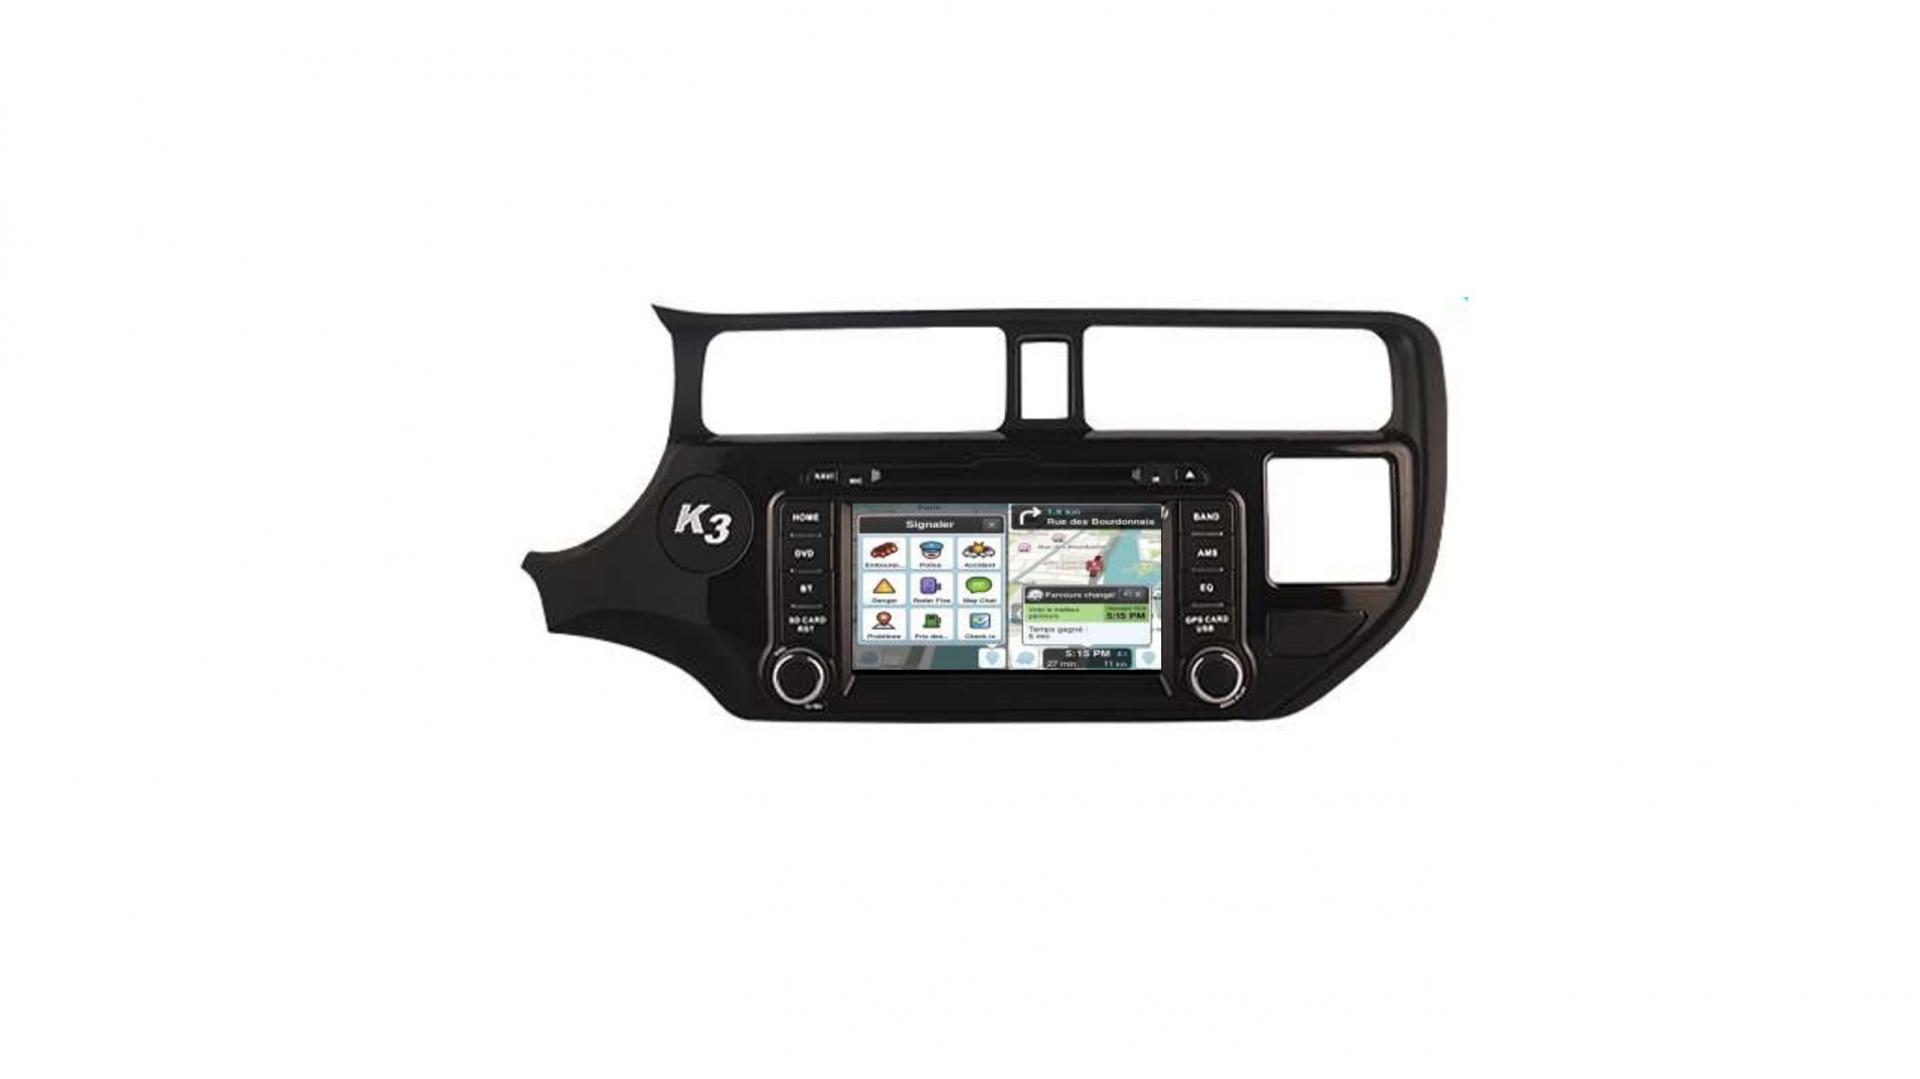 Autoradio androi d auto carplay gps bluetooth kia rio et k3 2011 2013 8